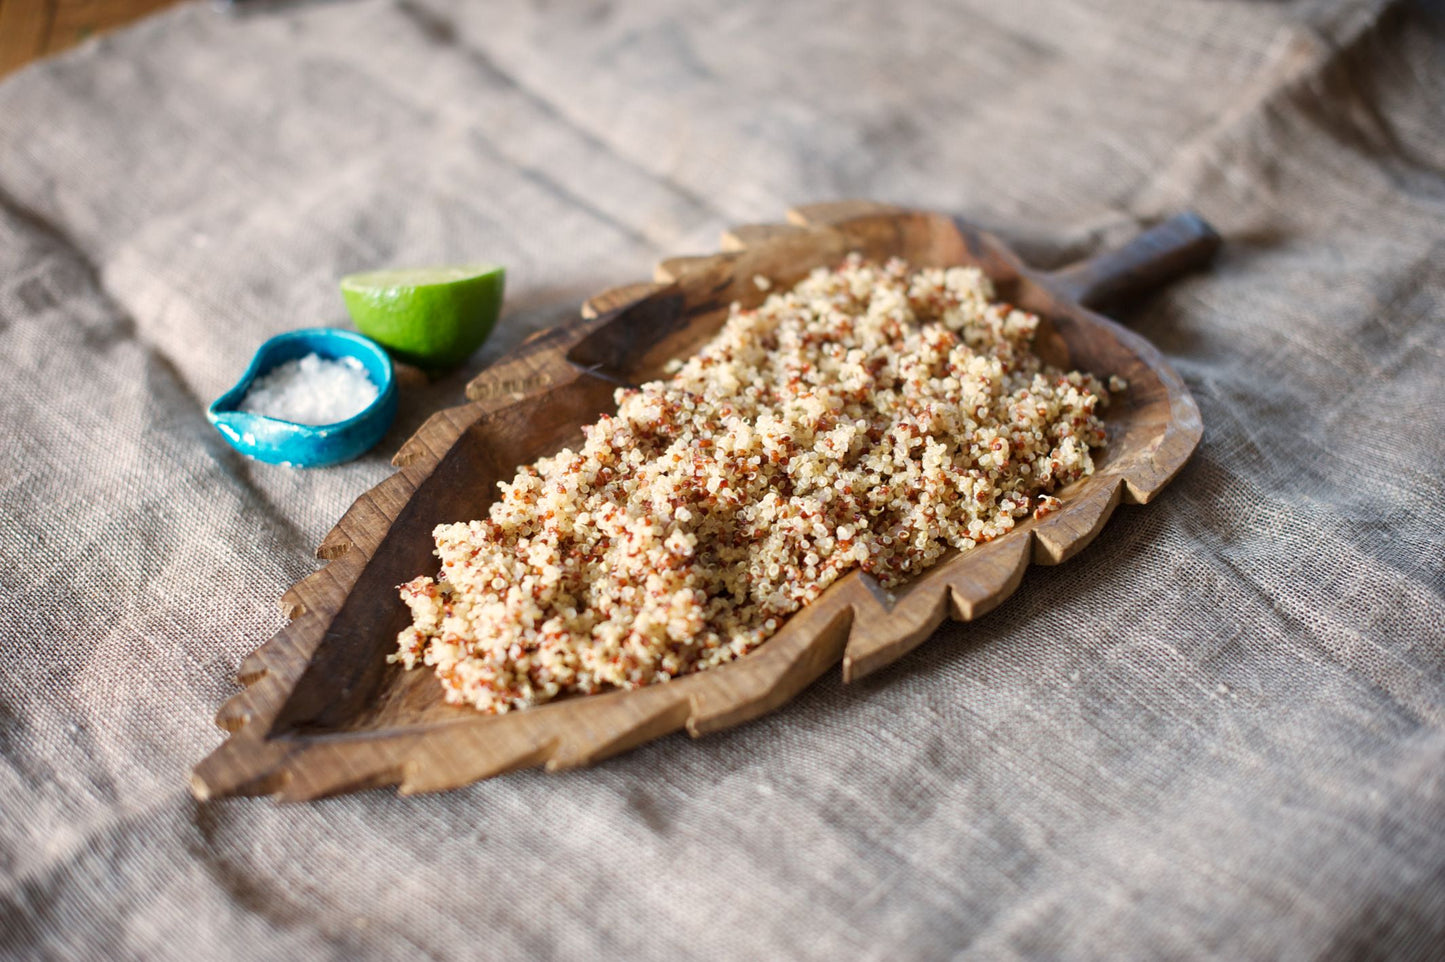 Quinoa nutrition for the win - get more fibre!